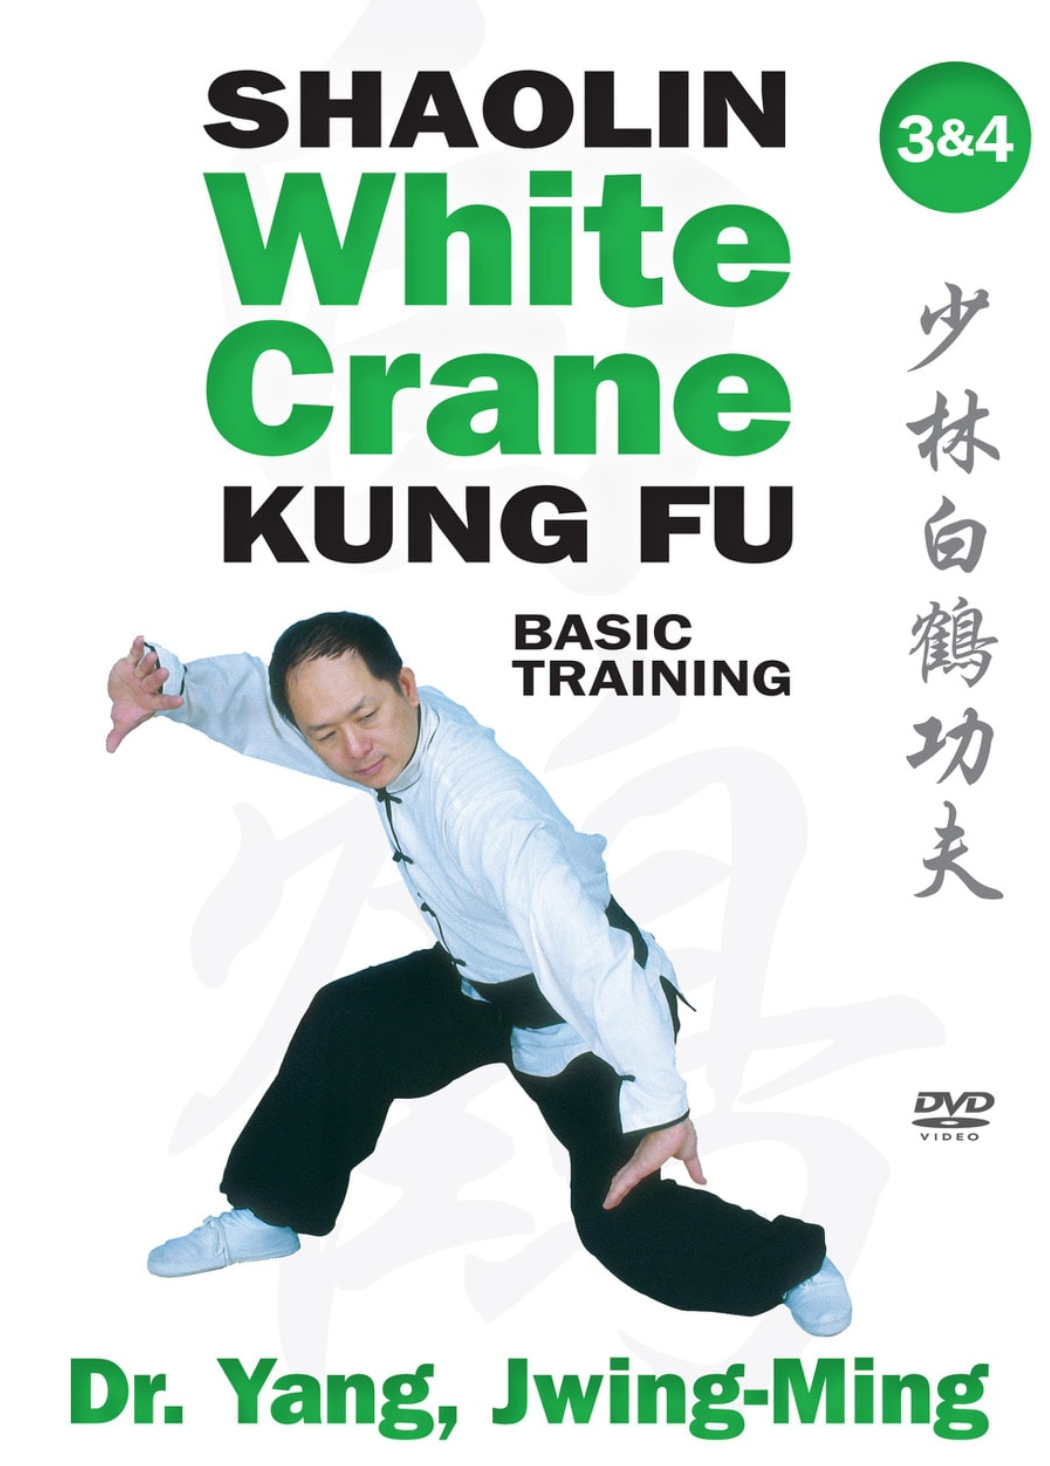 Shaolin White Crane Gong Fu Basic Training DVD Vol 3 & 4 with Dr Yang, Jwing Ming